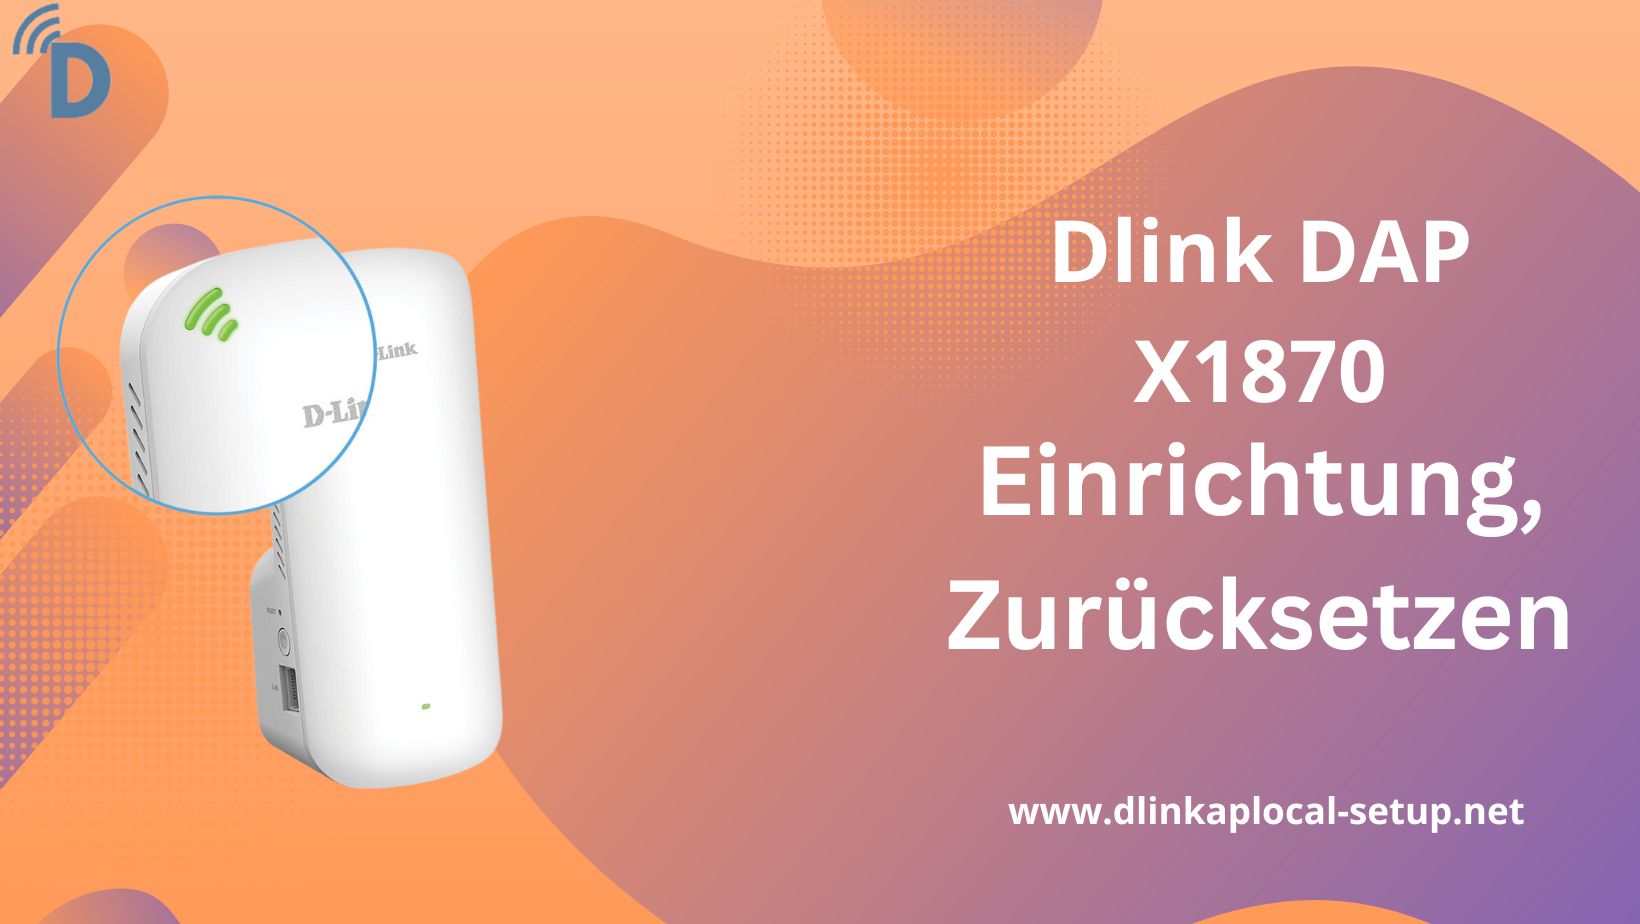 Dlink DAP X1870